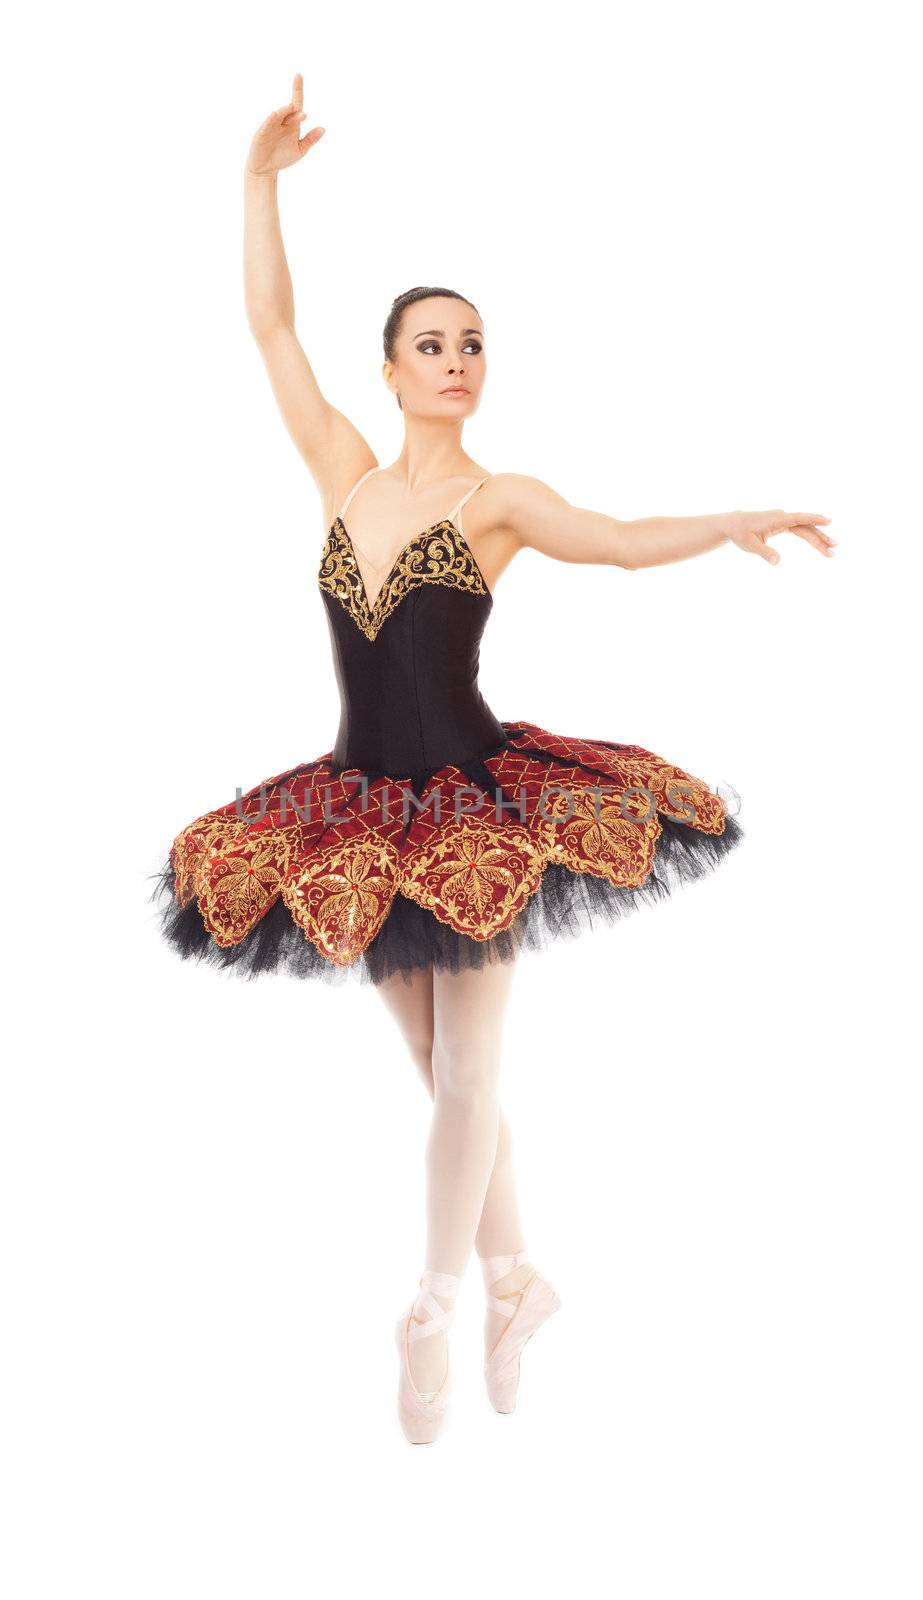 Female ballet dancer by vilevi